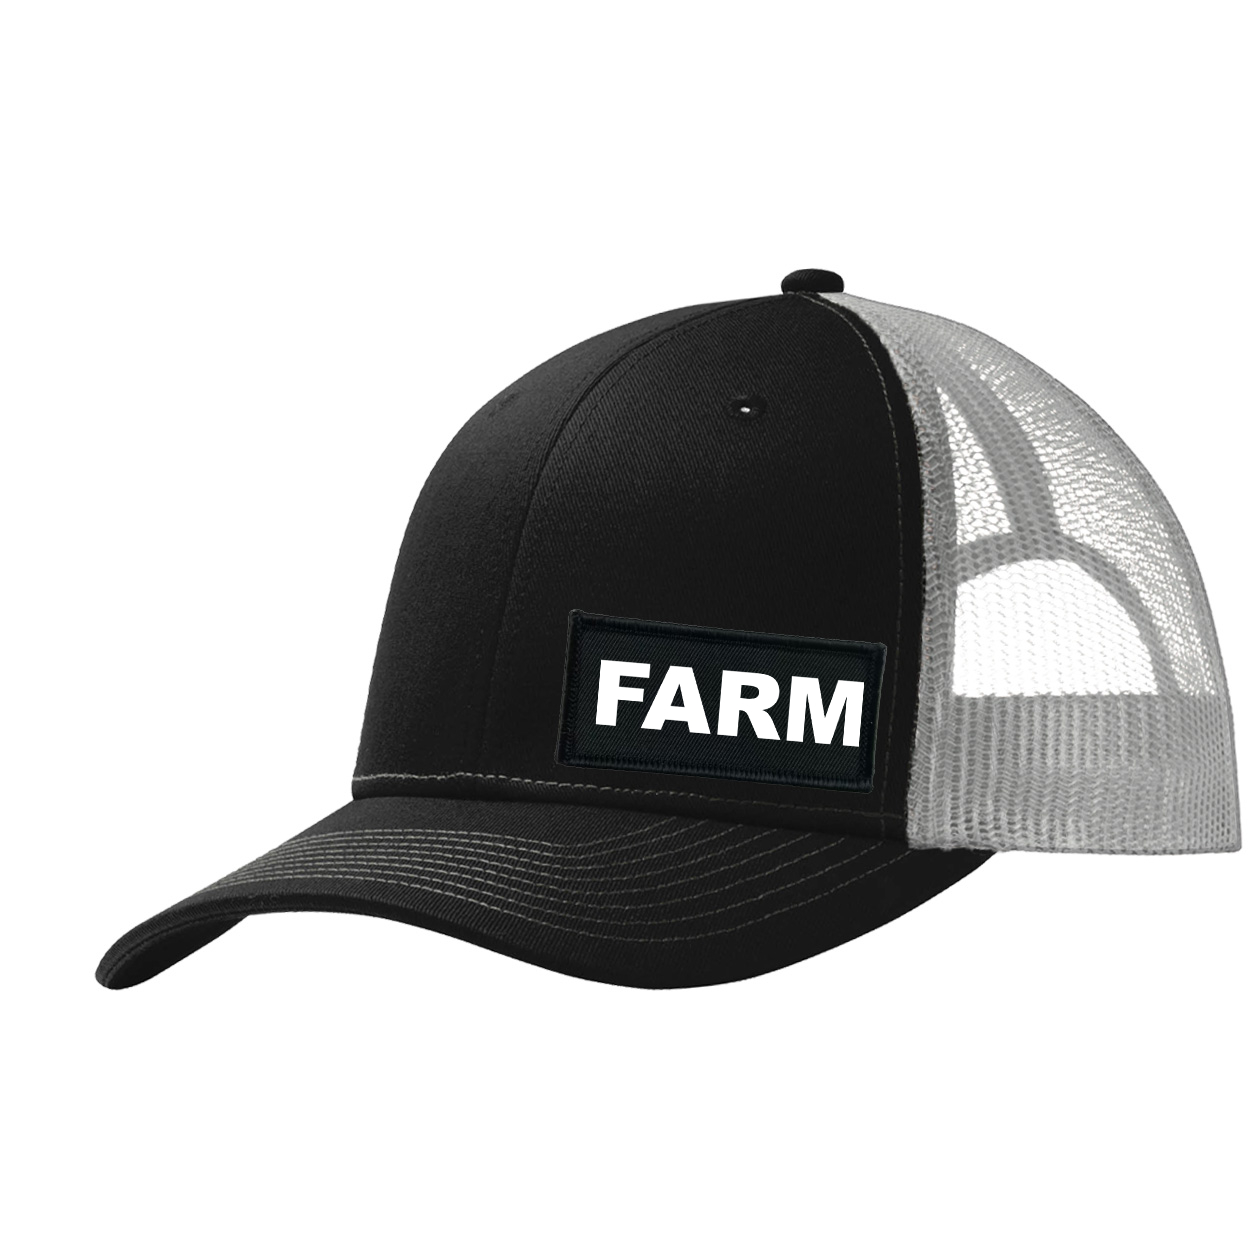 Farm Brand Logo Night Out Woven Patch Snapback Trucker Hat Black/Gray